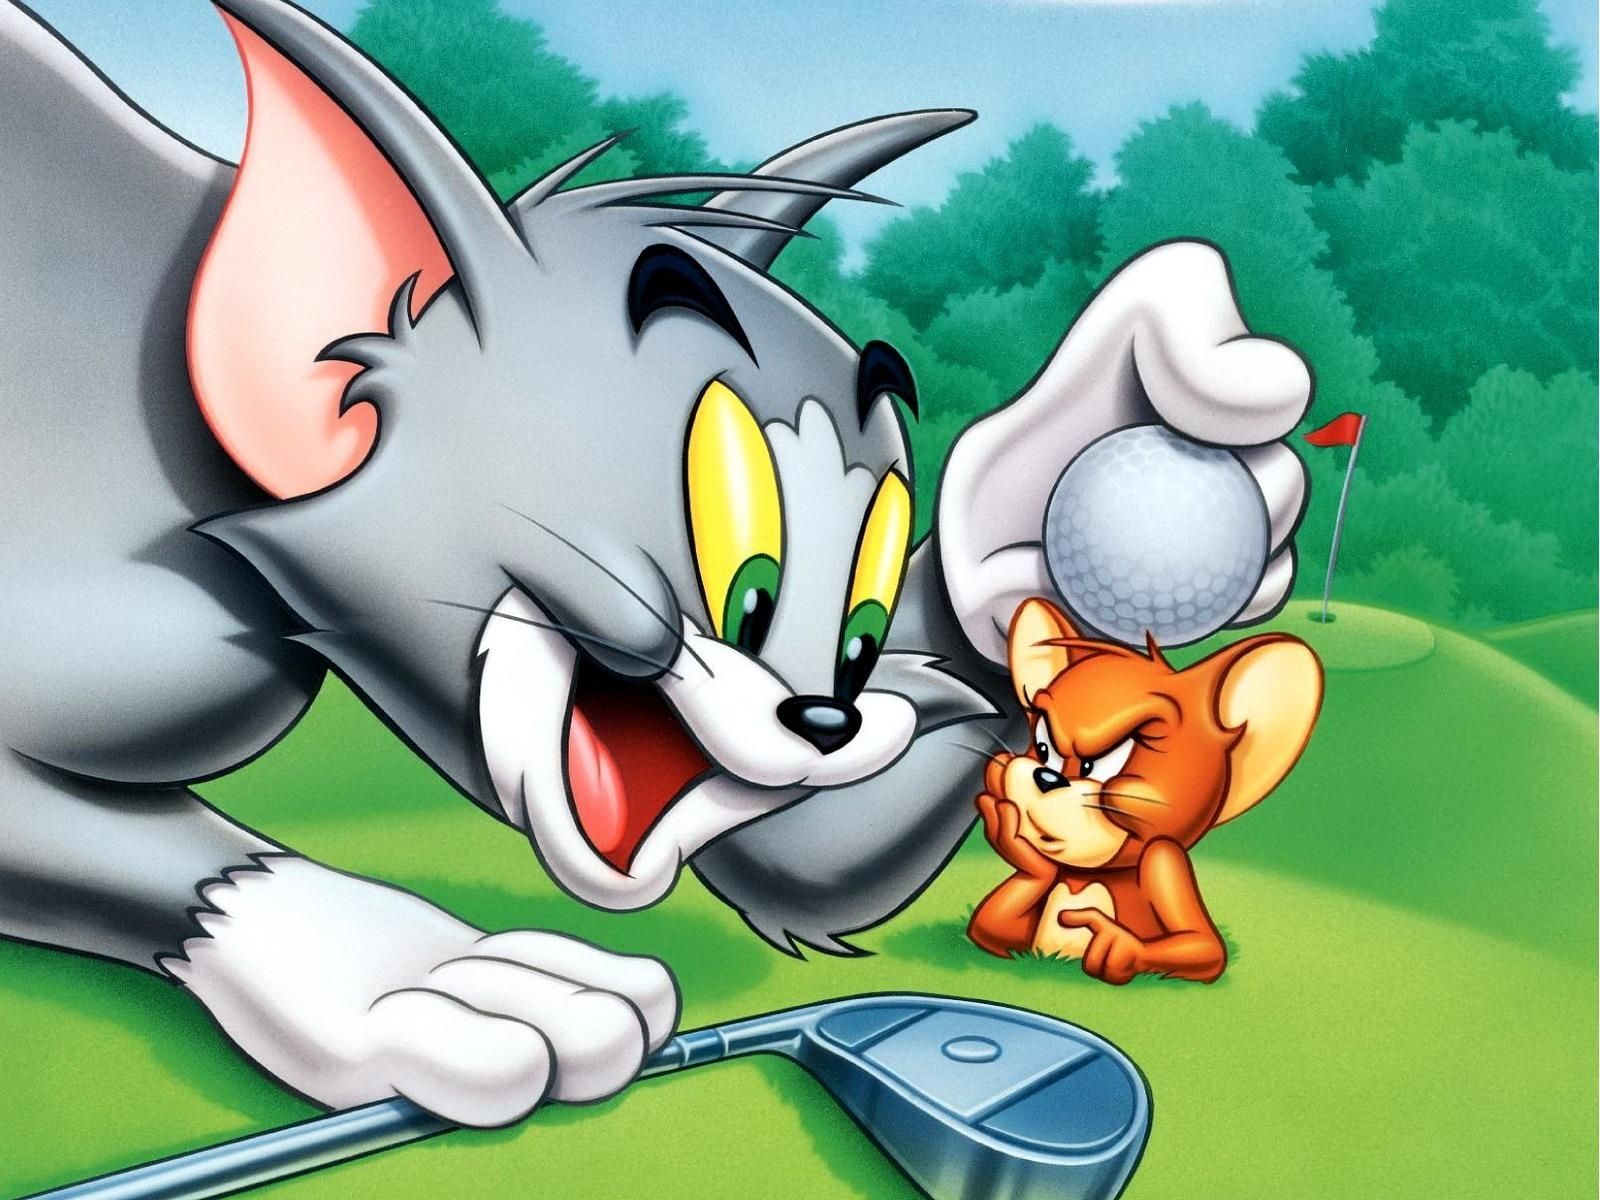 Tom a Jerry